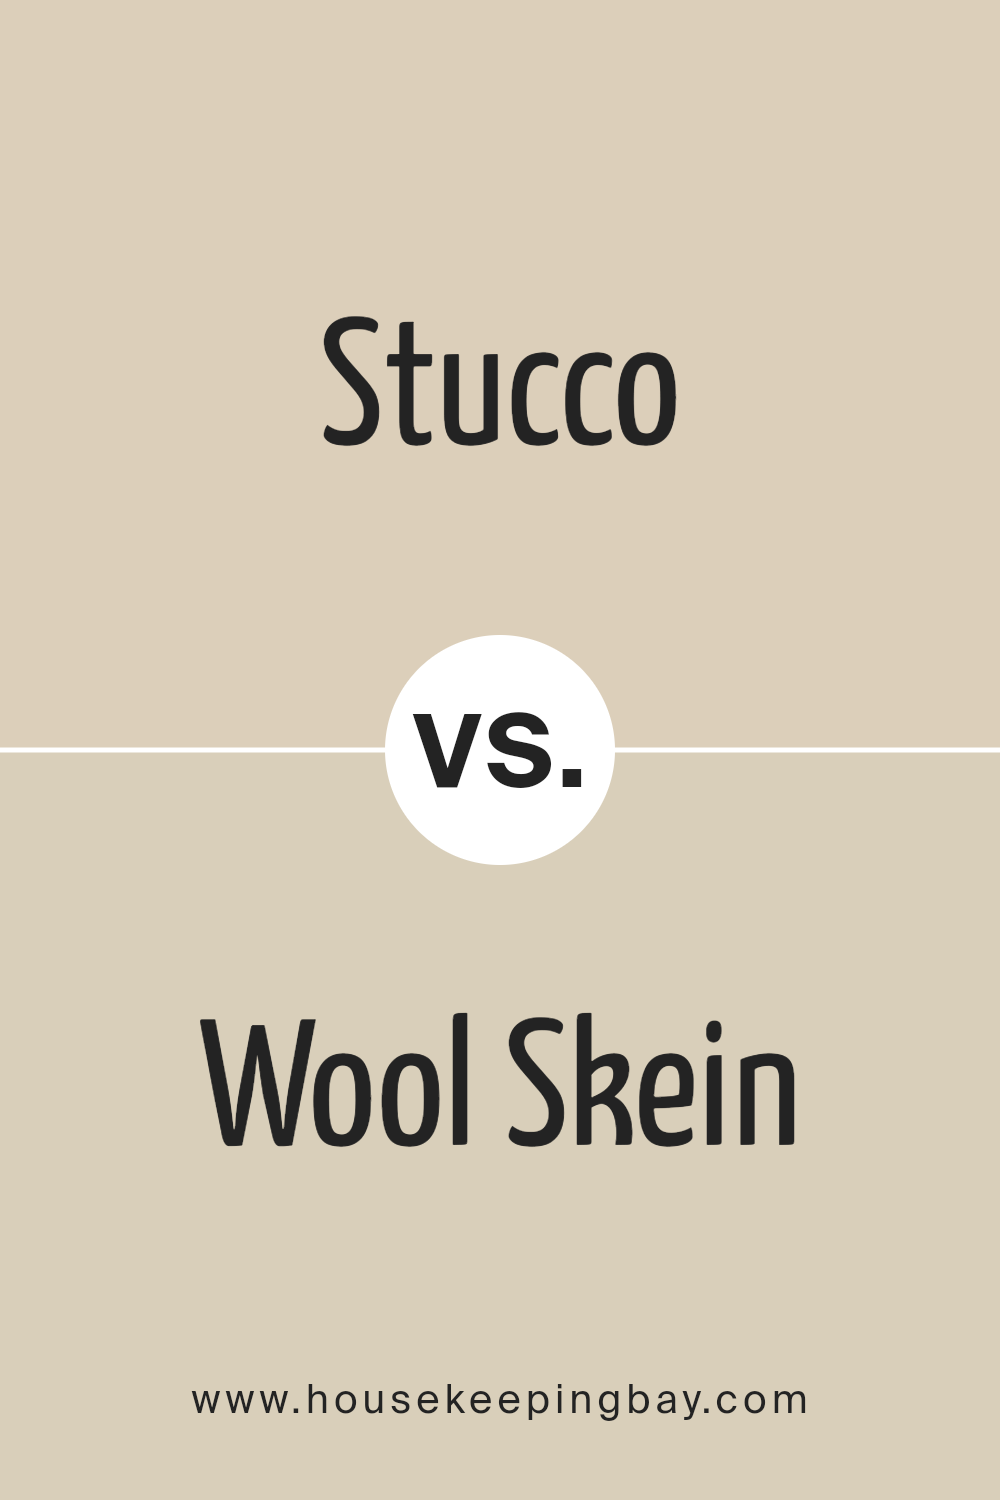 stucco_sw_7569_vs_wool_skein_sw_6148